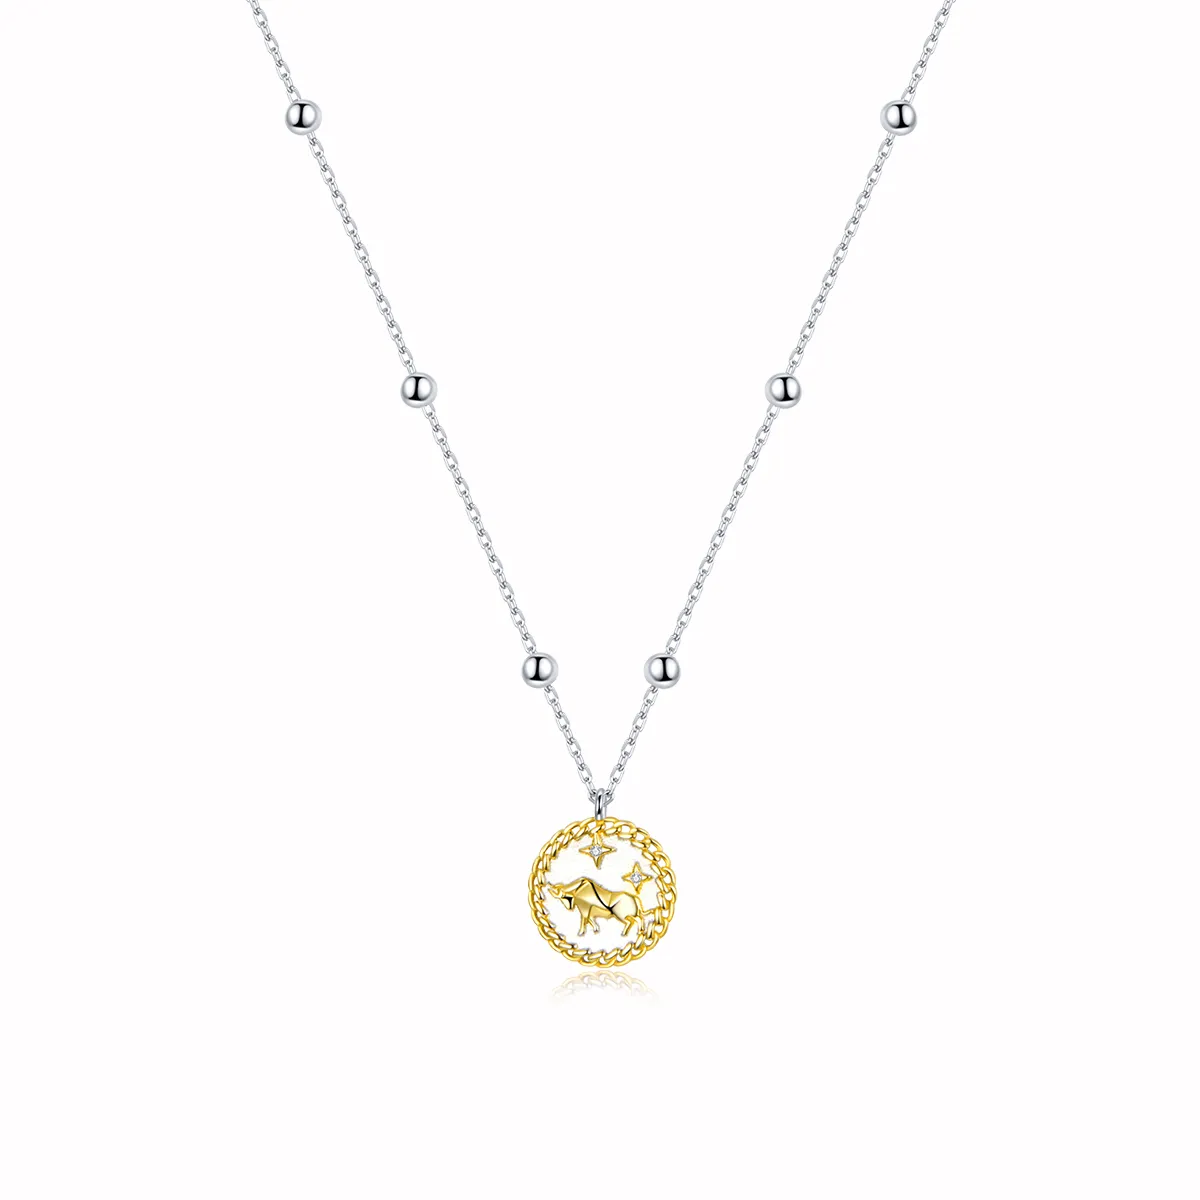 Pandora Style Lucky Pig Necklace - BSN090